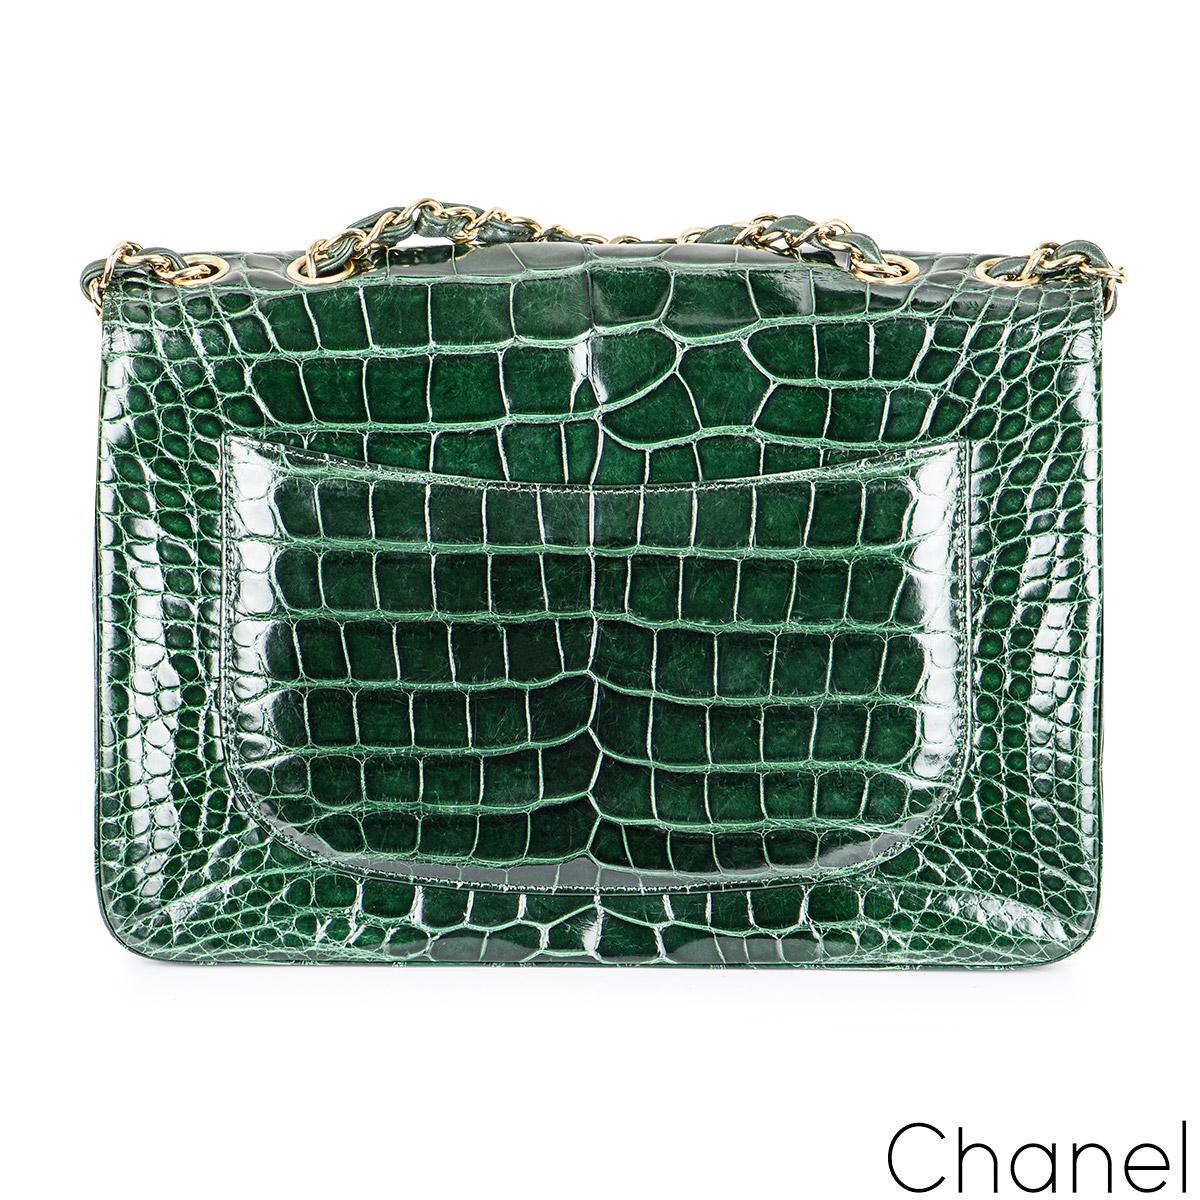 Noir Chanel Greene & Greene Greene Classic Flap Bag en vente